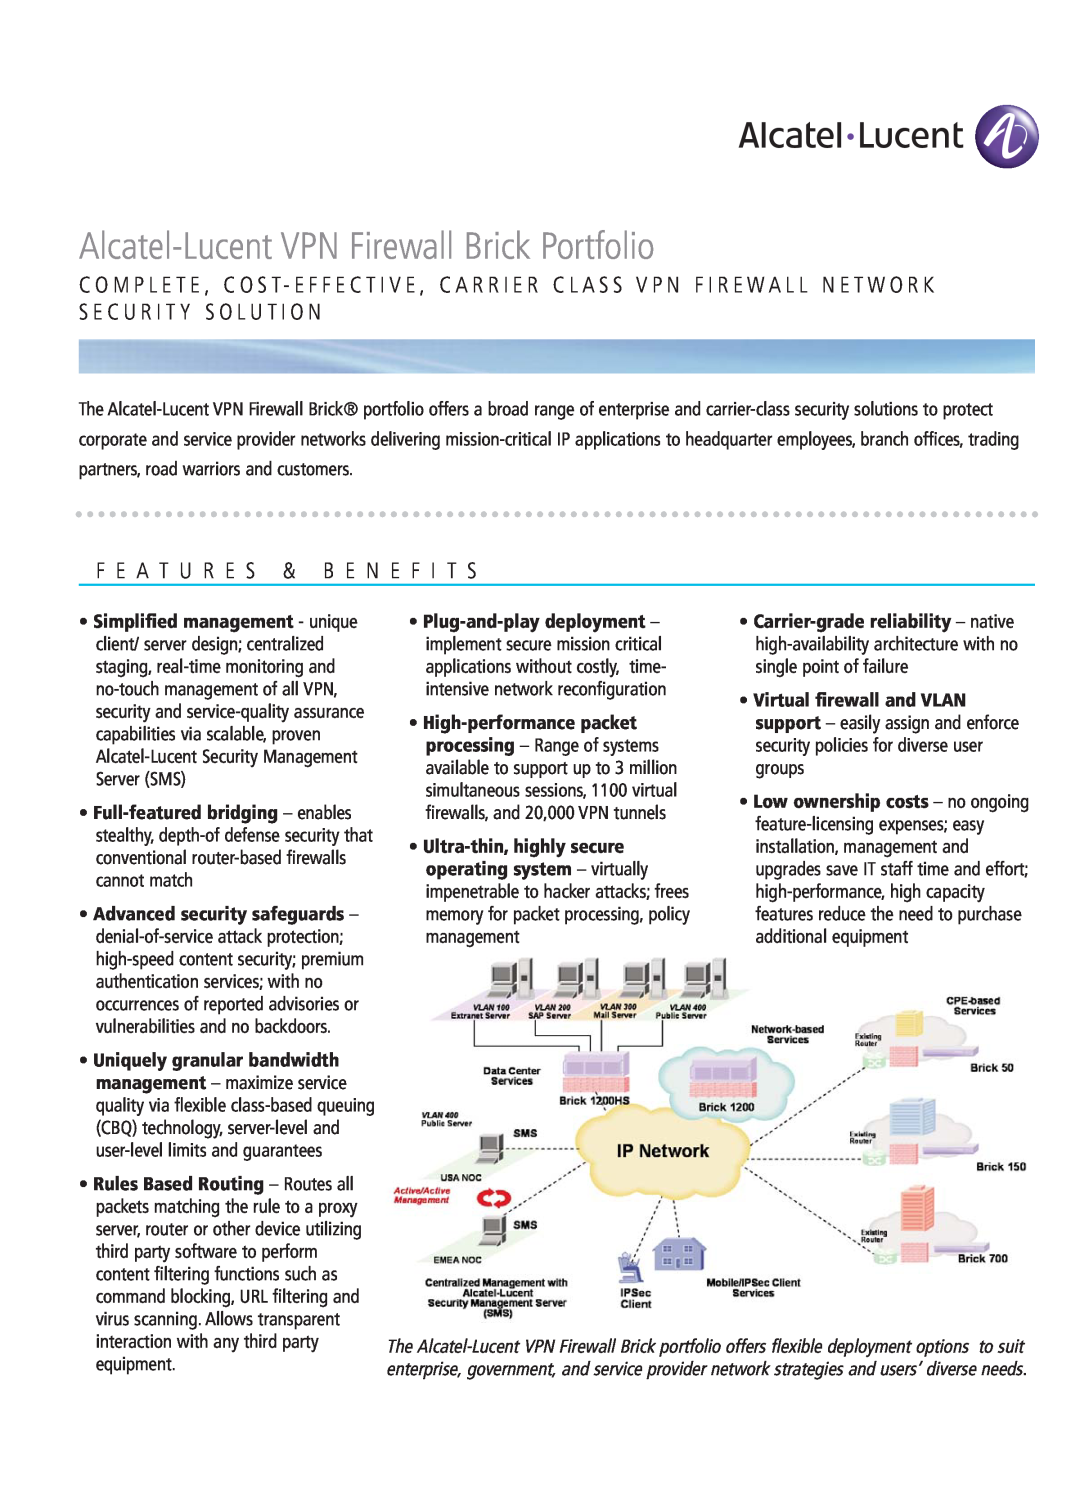 Alcatel-Lucent VPN Firewall Brick Portfolio manual F E A T U R E S & B E N E F I T S, Full-featured bridging - enables 